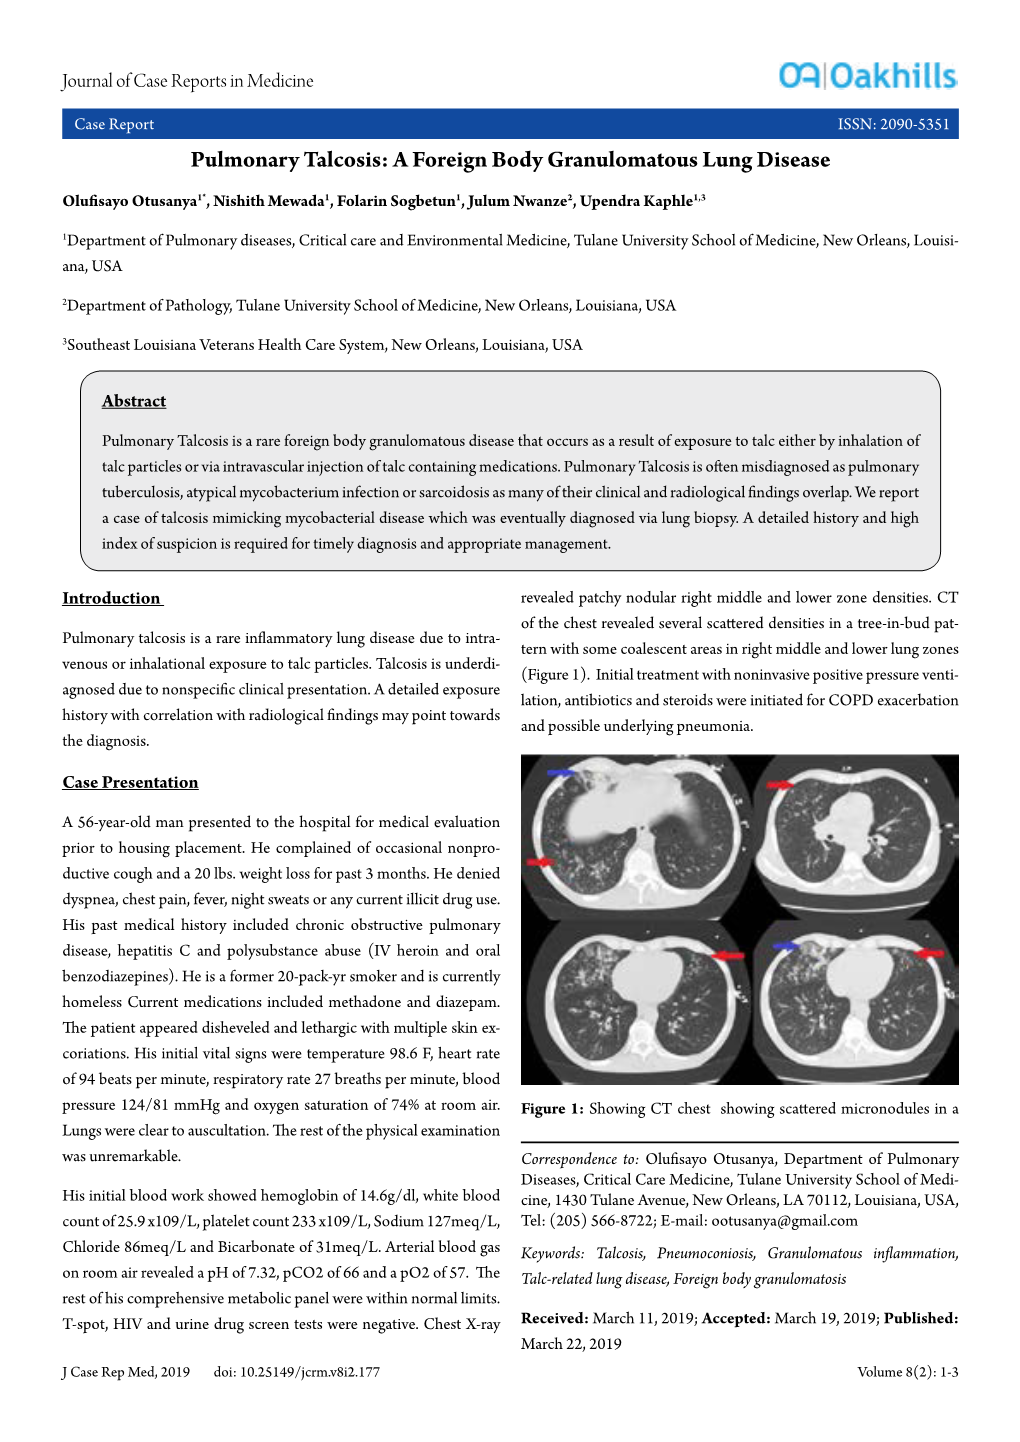 Pulmonary Talcosis: a Foreign Body Granulomatous Lung Disease